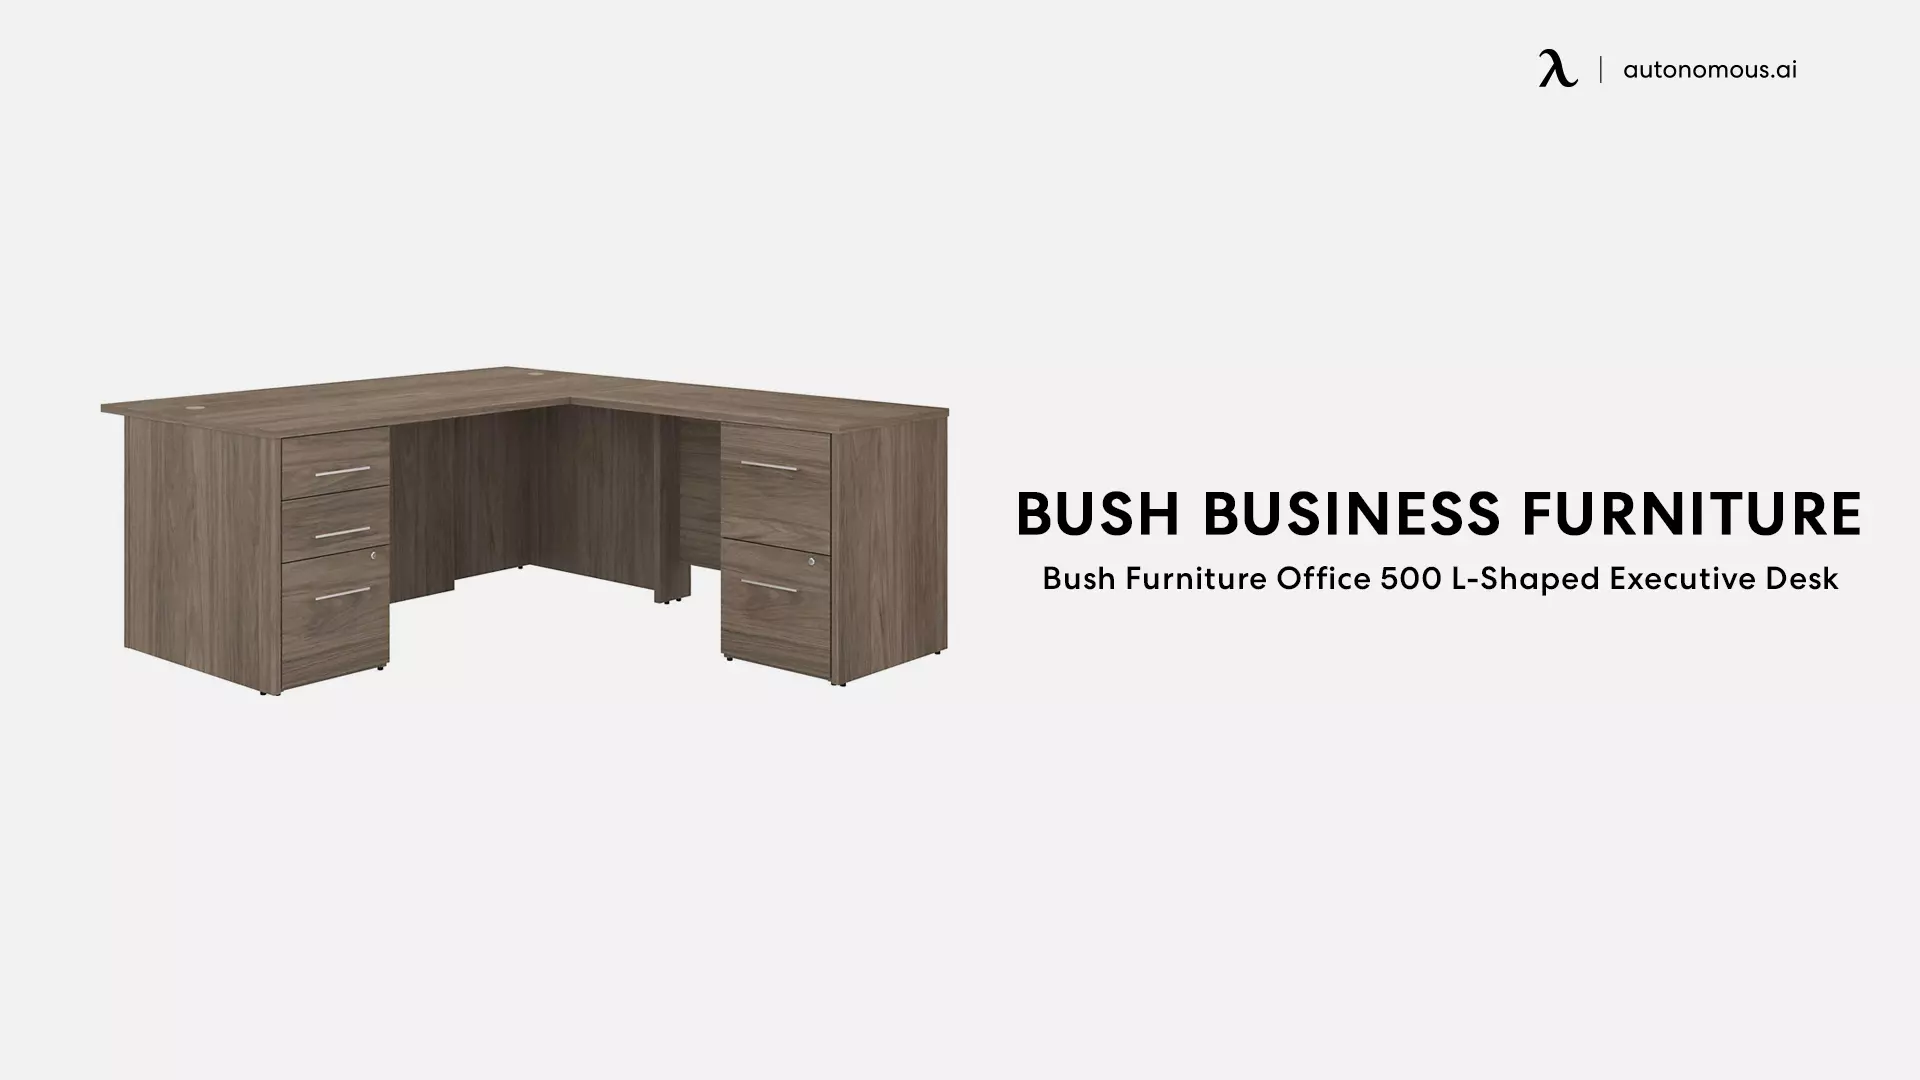 Bush Furniture Office 500 L-Shaped Executive Desk